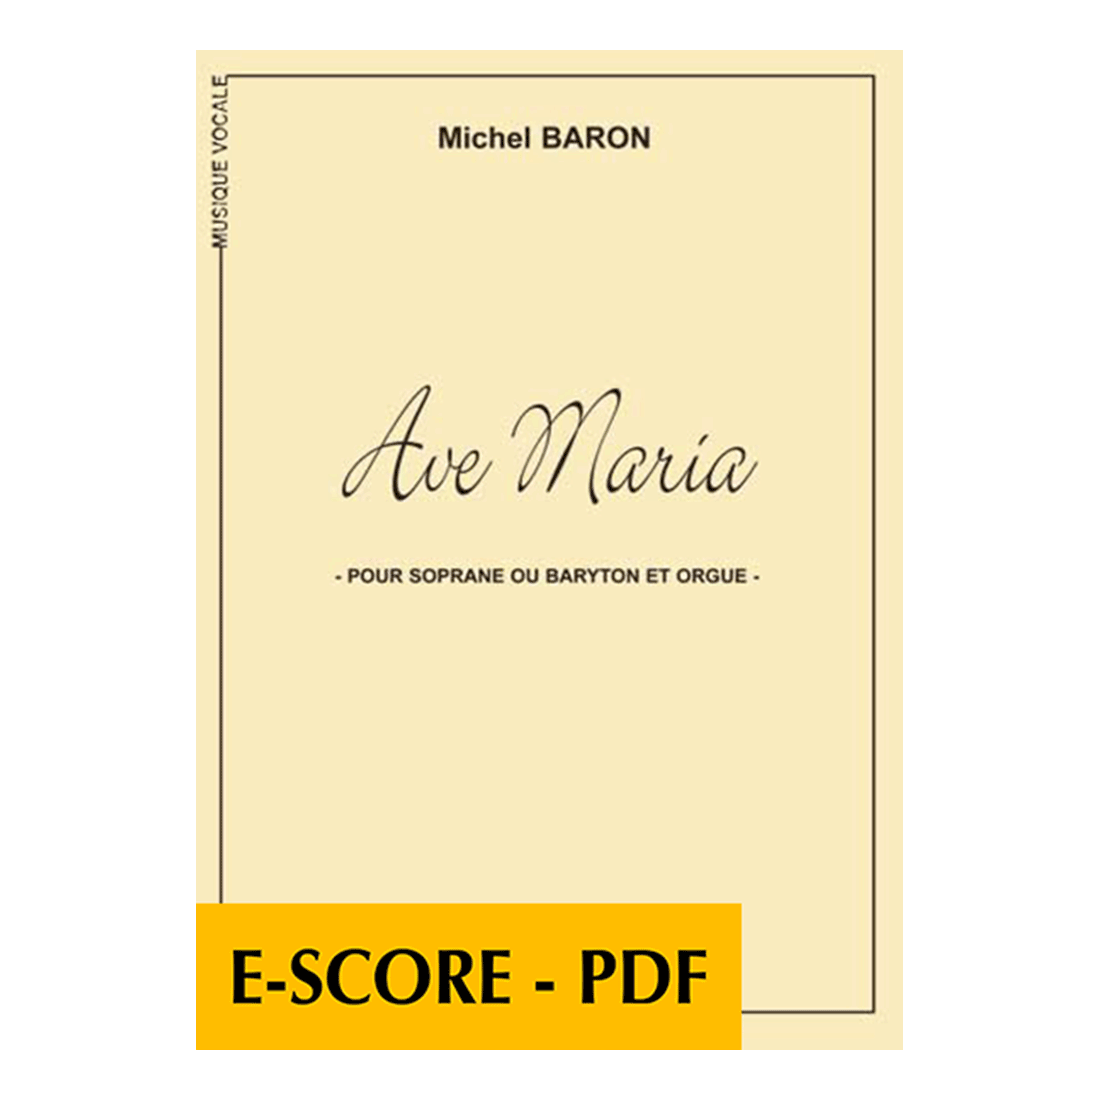 Ave Maria für Sopran oder Bariton und Orgel - E-score PDF